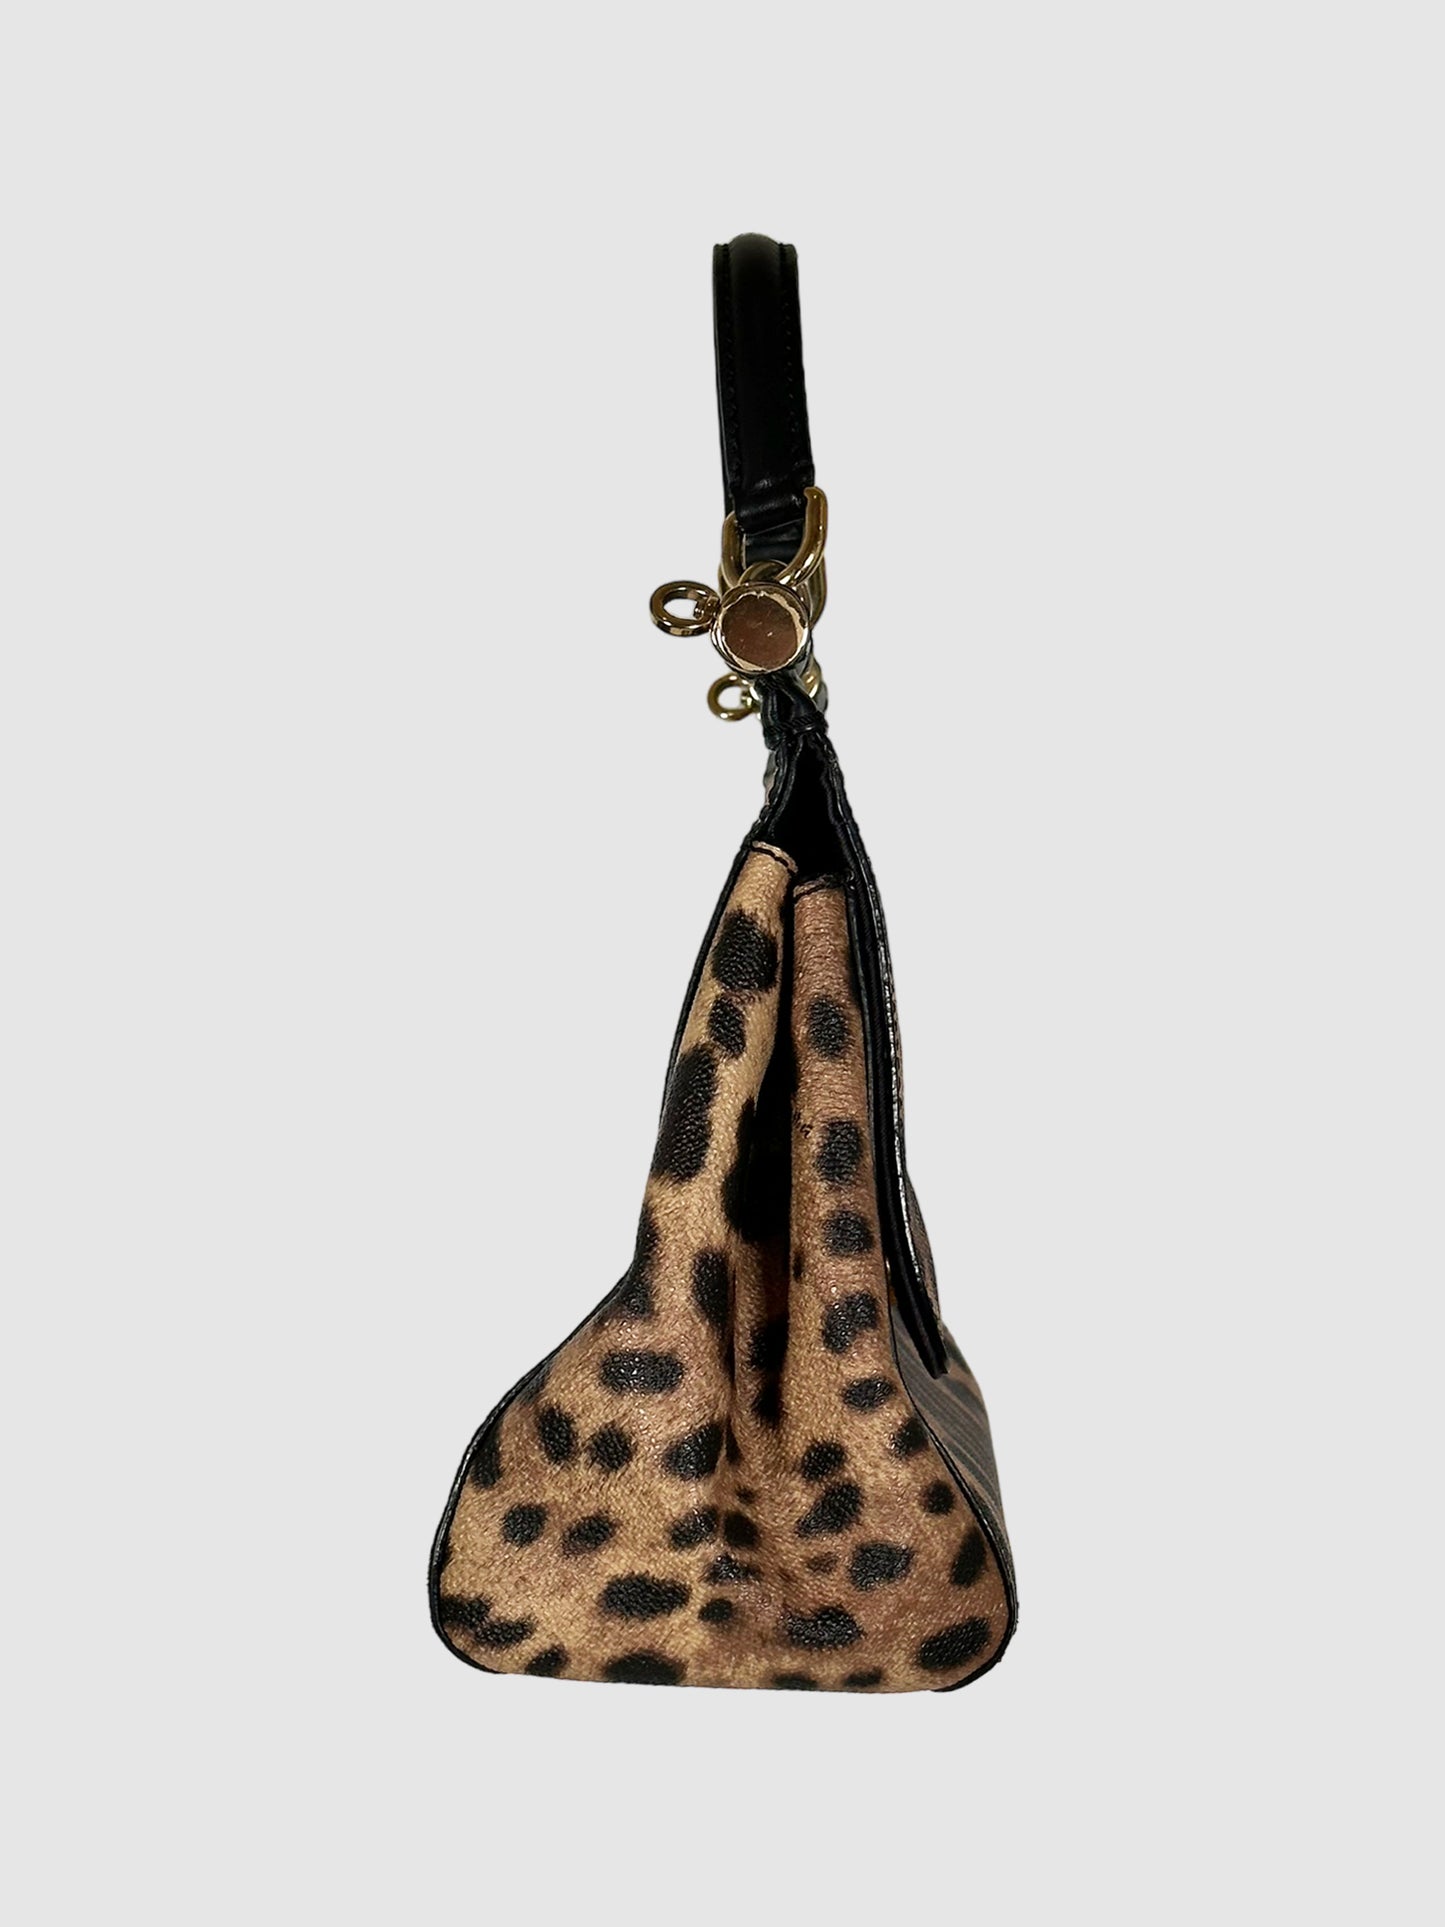 Leopard Print Miss Sicily Convertible Handle Bag